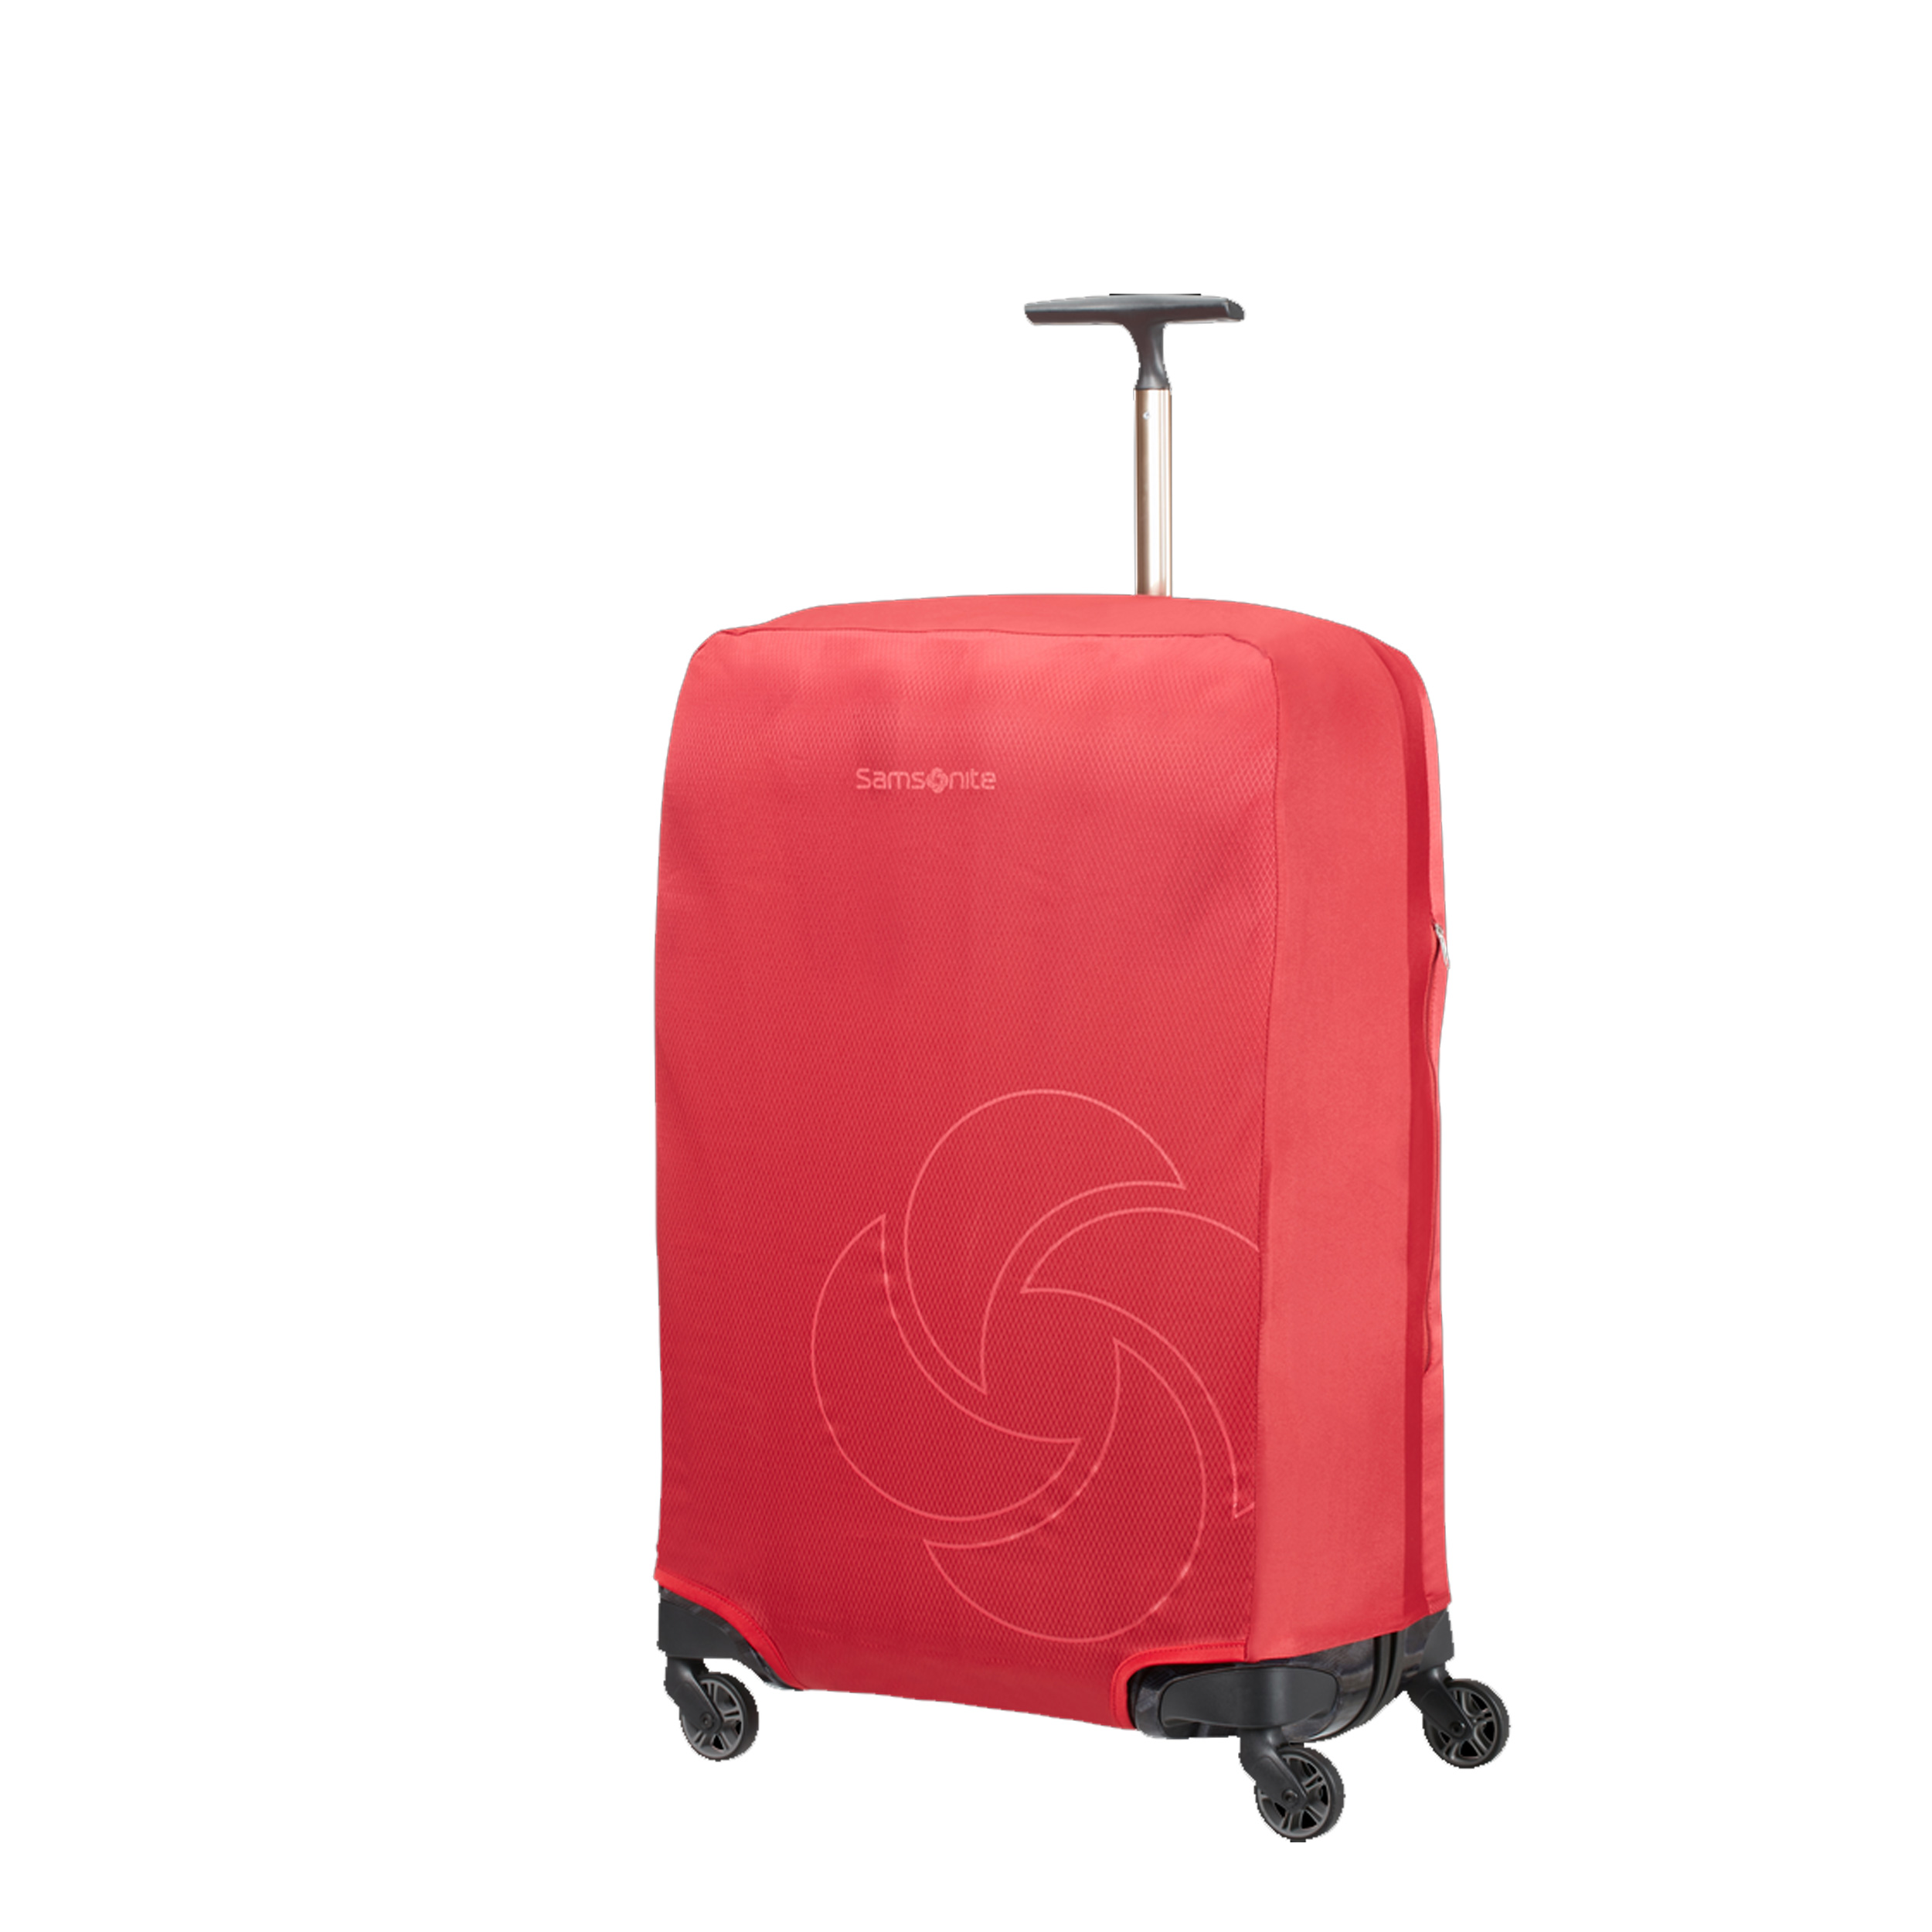 housse valise samsonite 75cm rouge